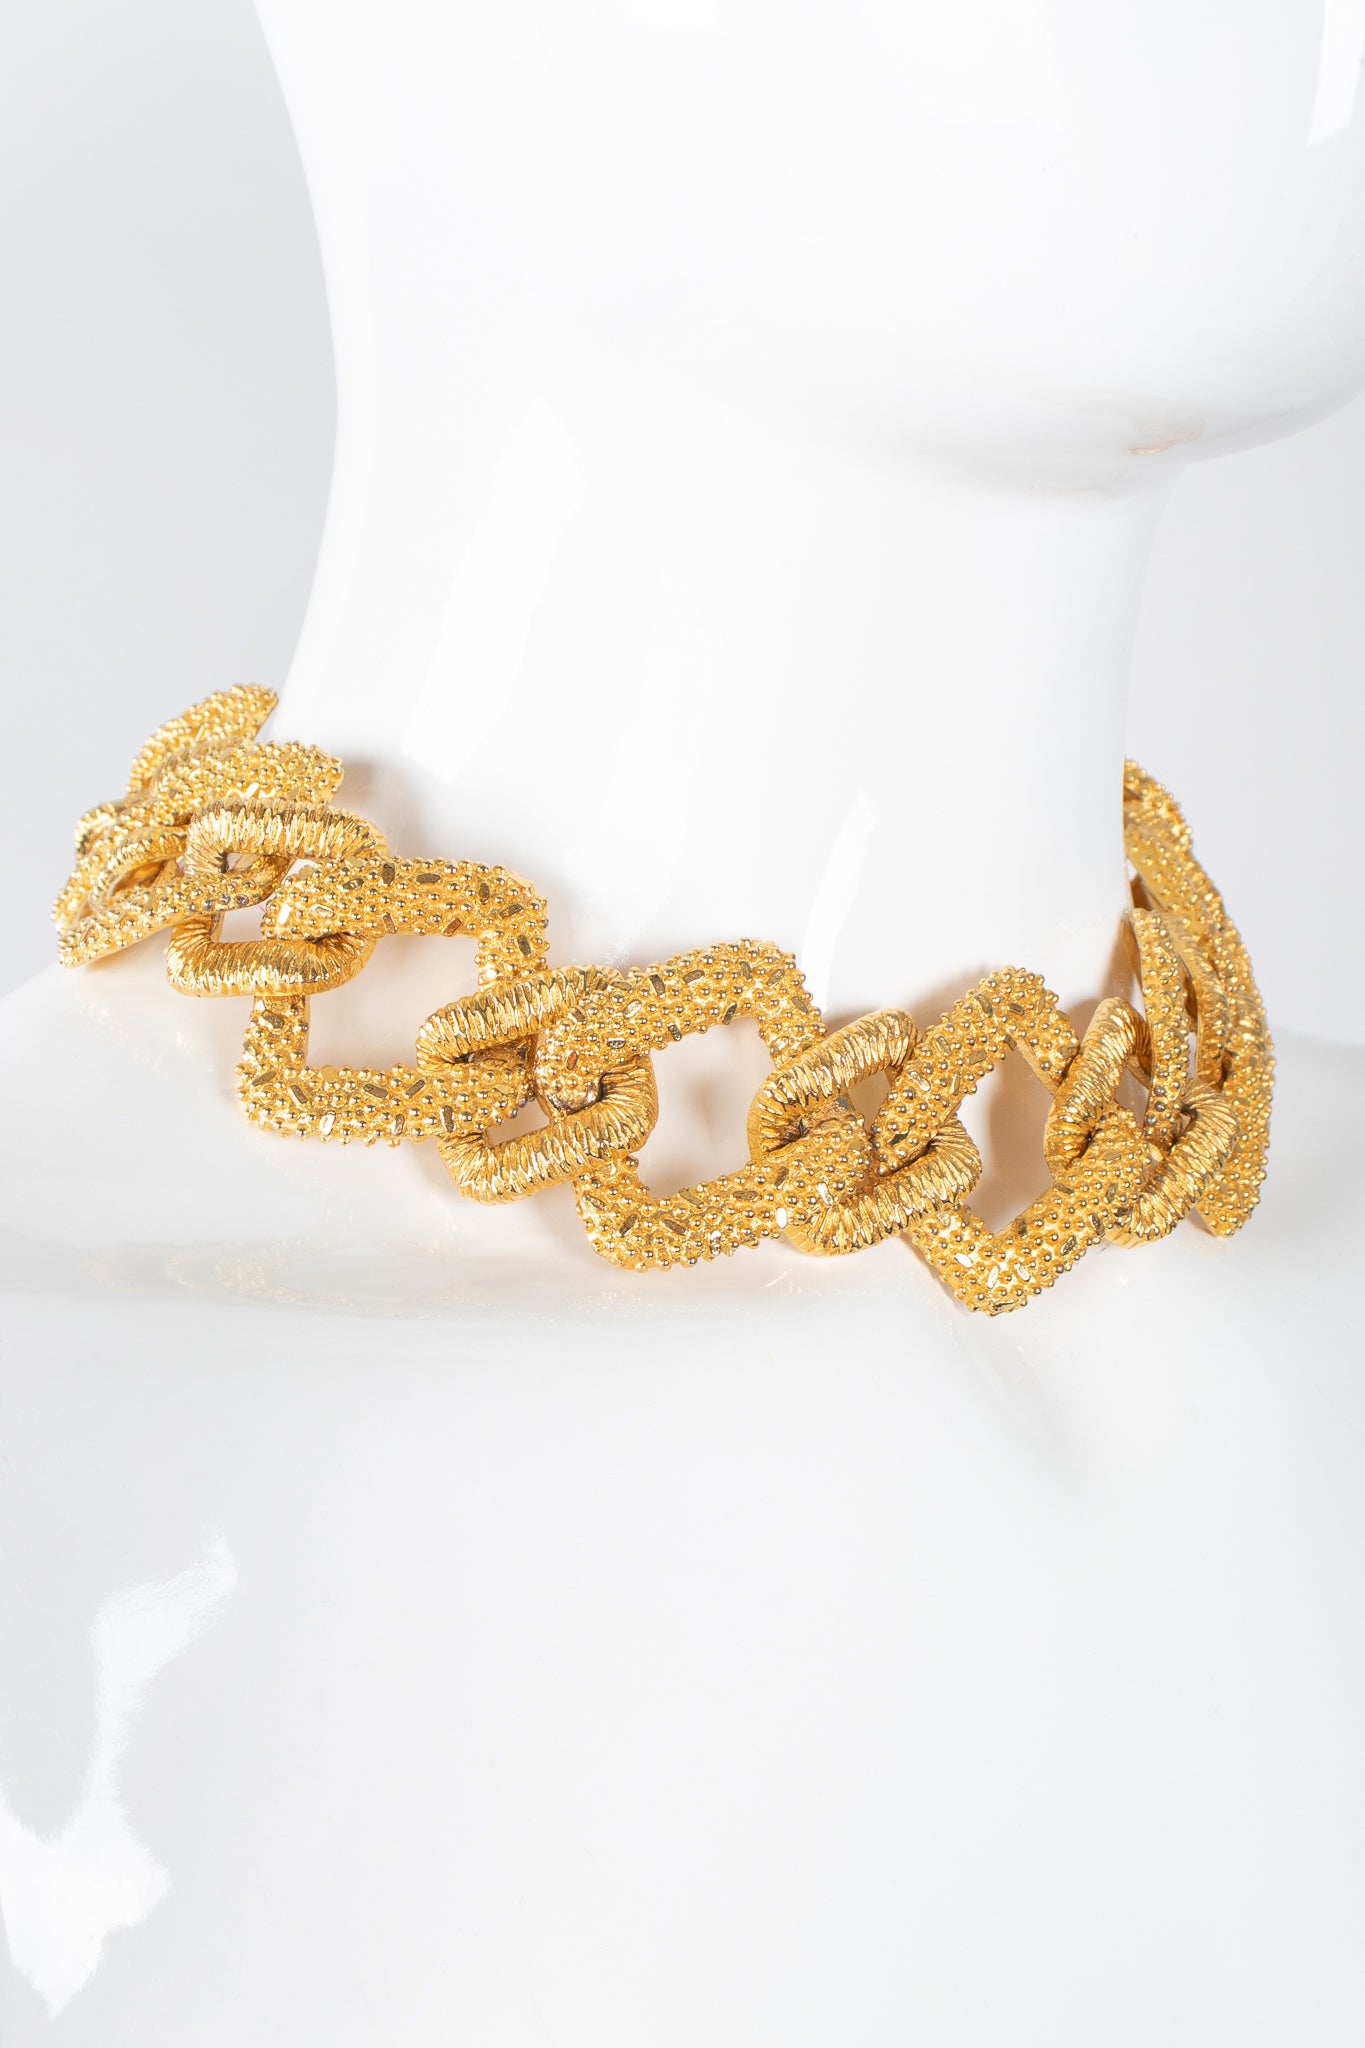 Recess Los Angeles Designer Consignment Vintage Mimi Di N Niscemi Textured Square Chain Collar Necklace